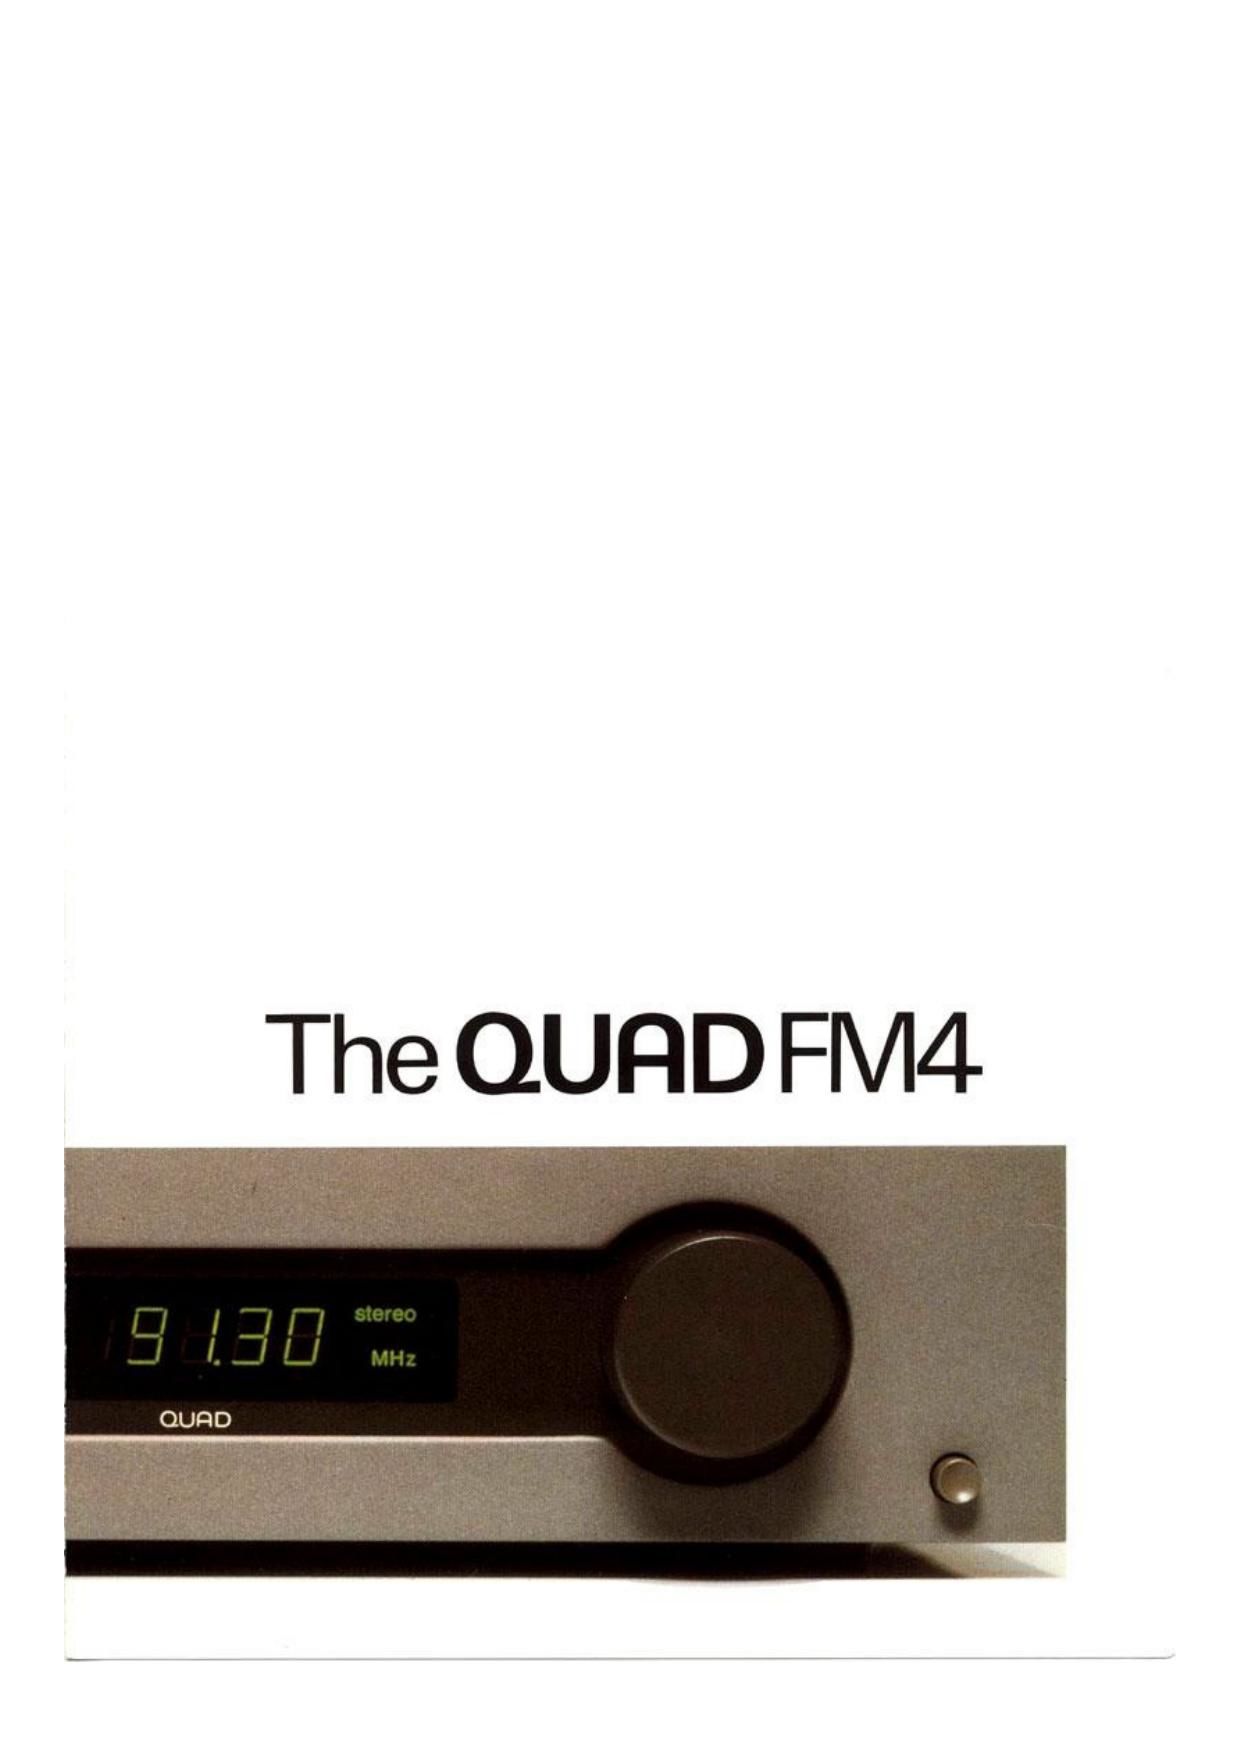 Quad FM4 Brochure